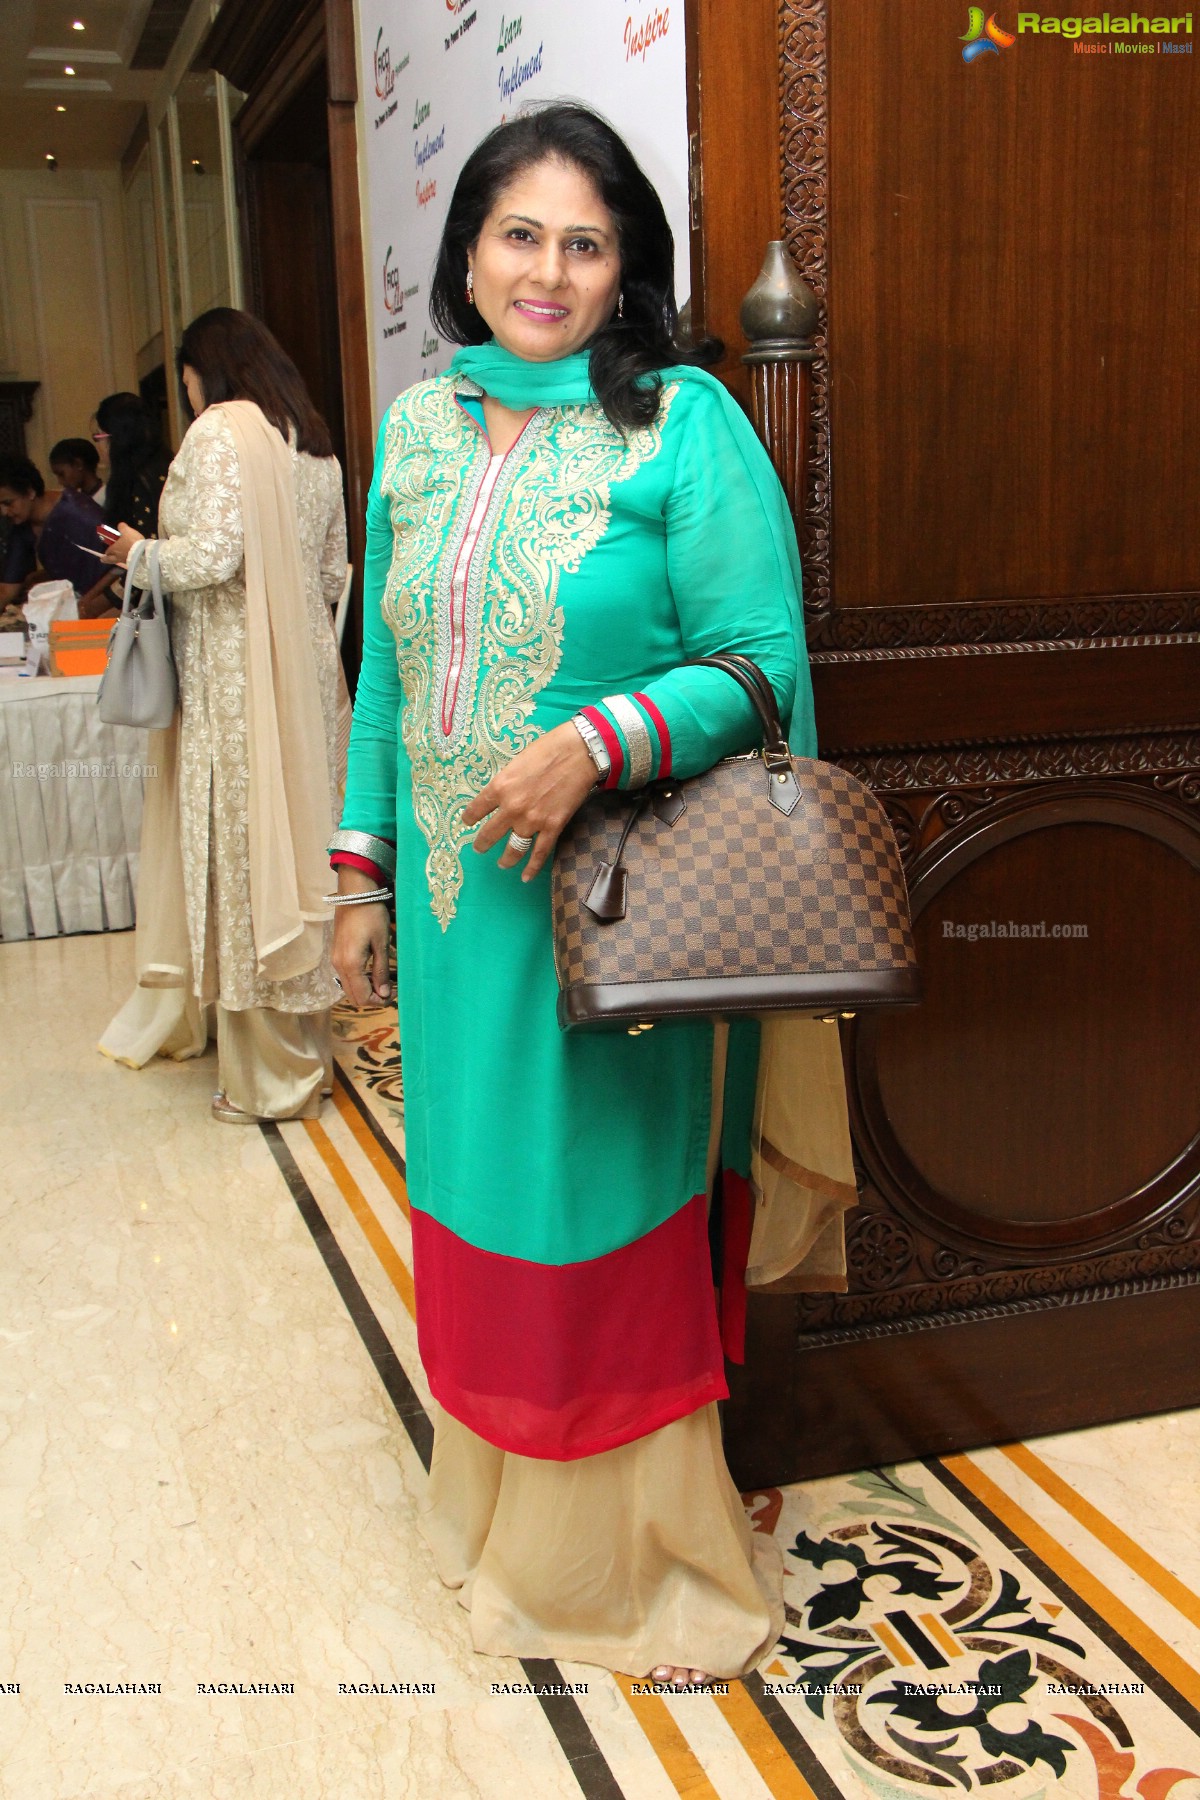 Celebrate Womanhood with Sharmila Tagore and Soha Ali Khan - FICCI Ladies Organisation Event at Taj Banjara